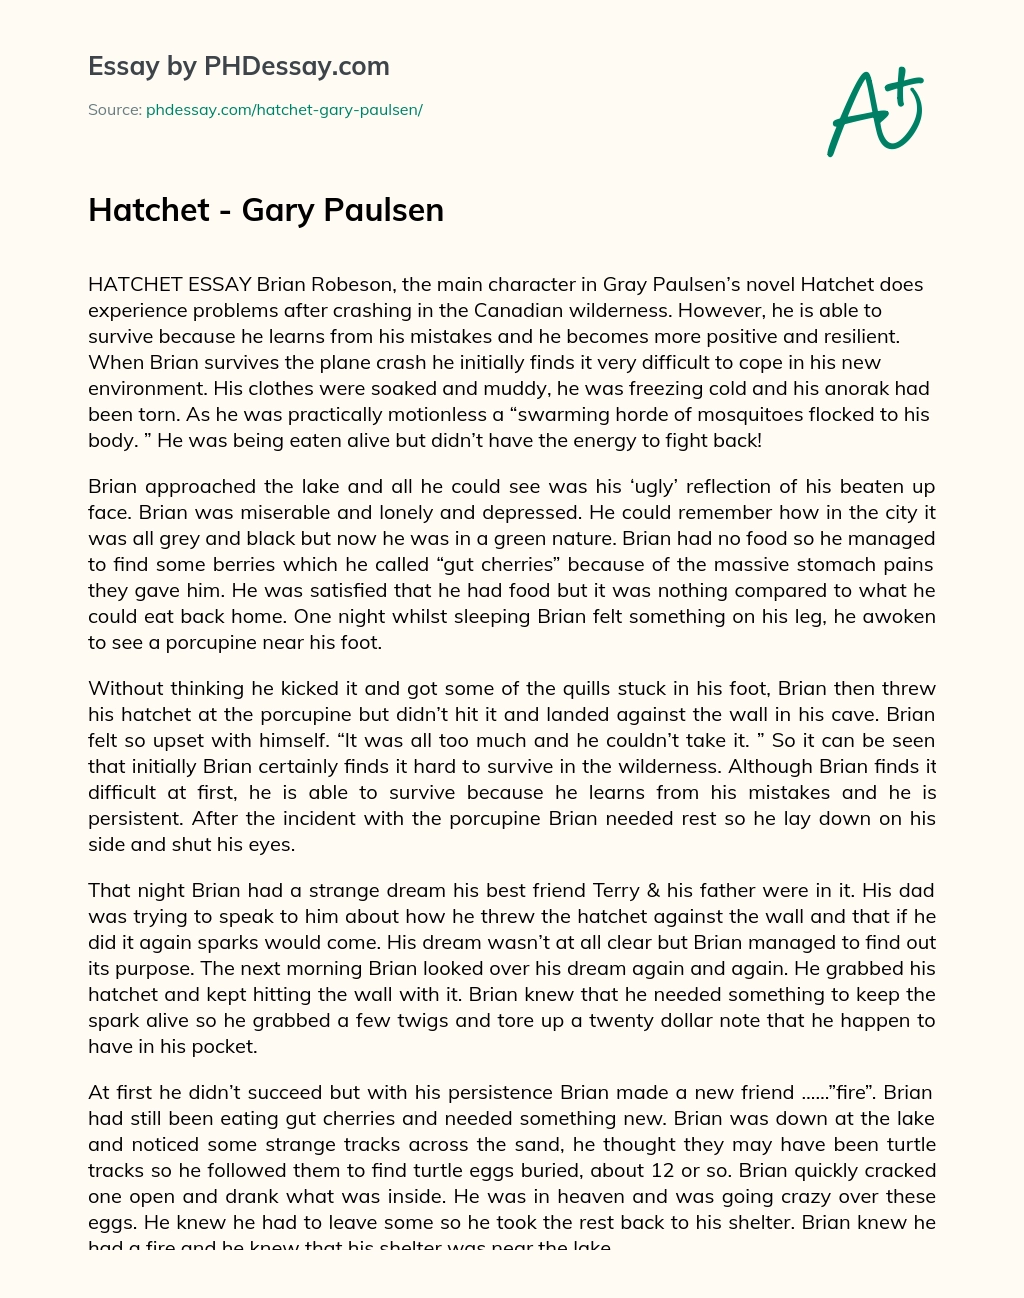 Hatchet – Gary Paulsen essay